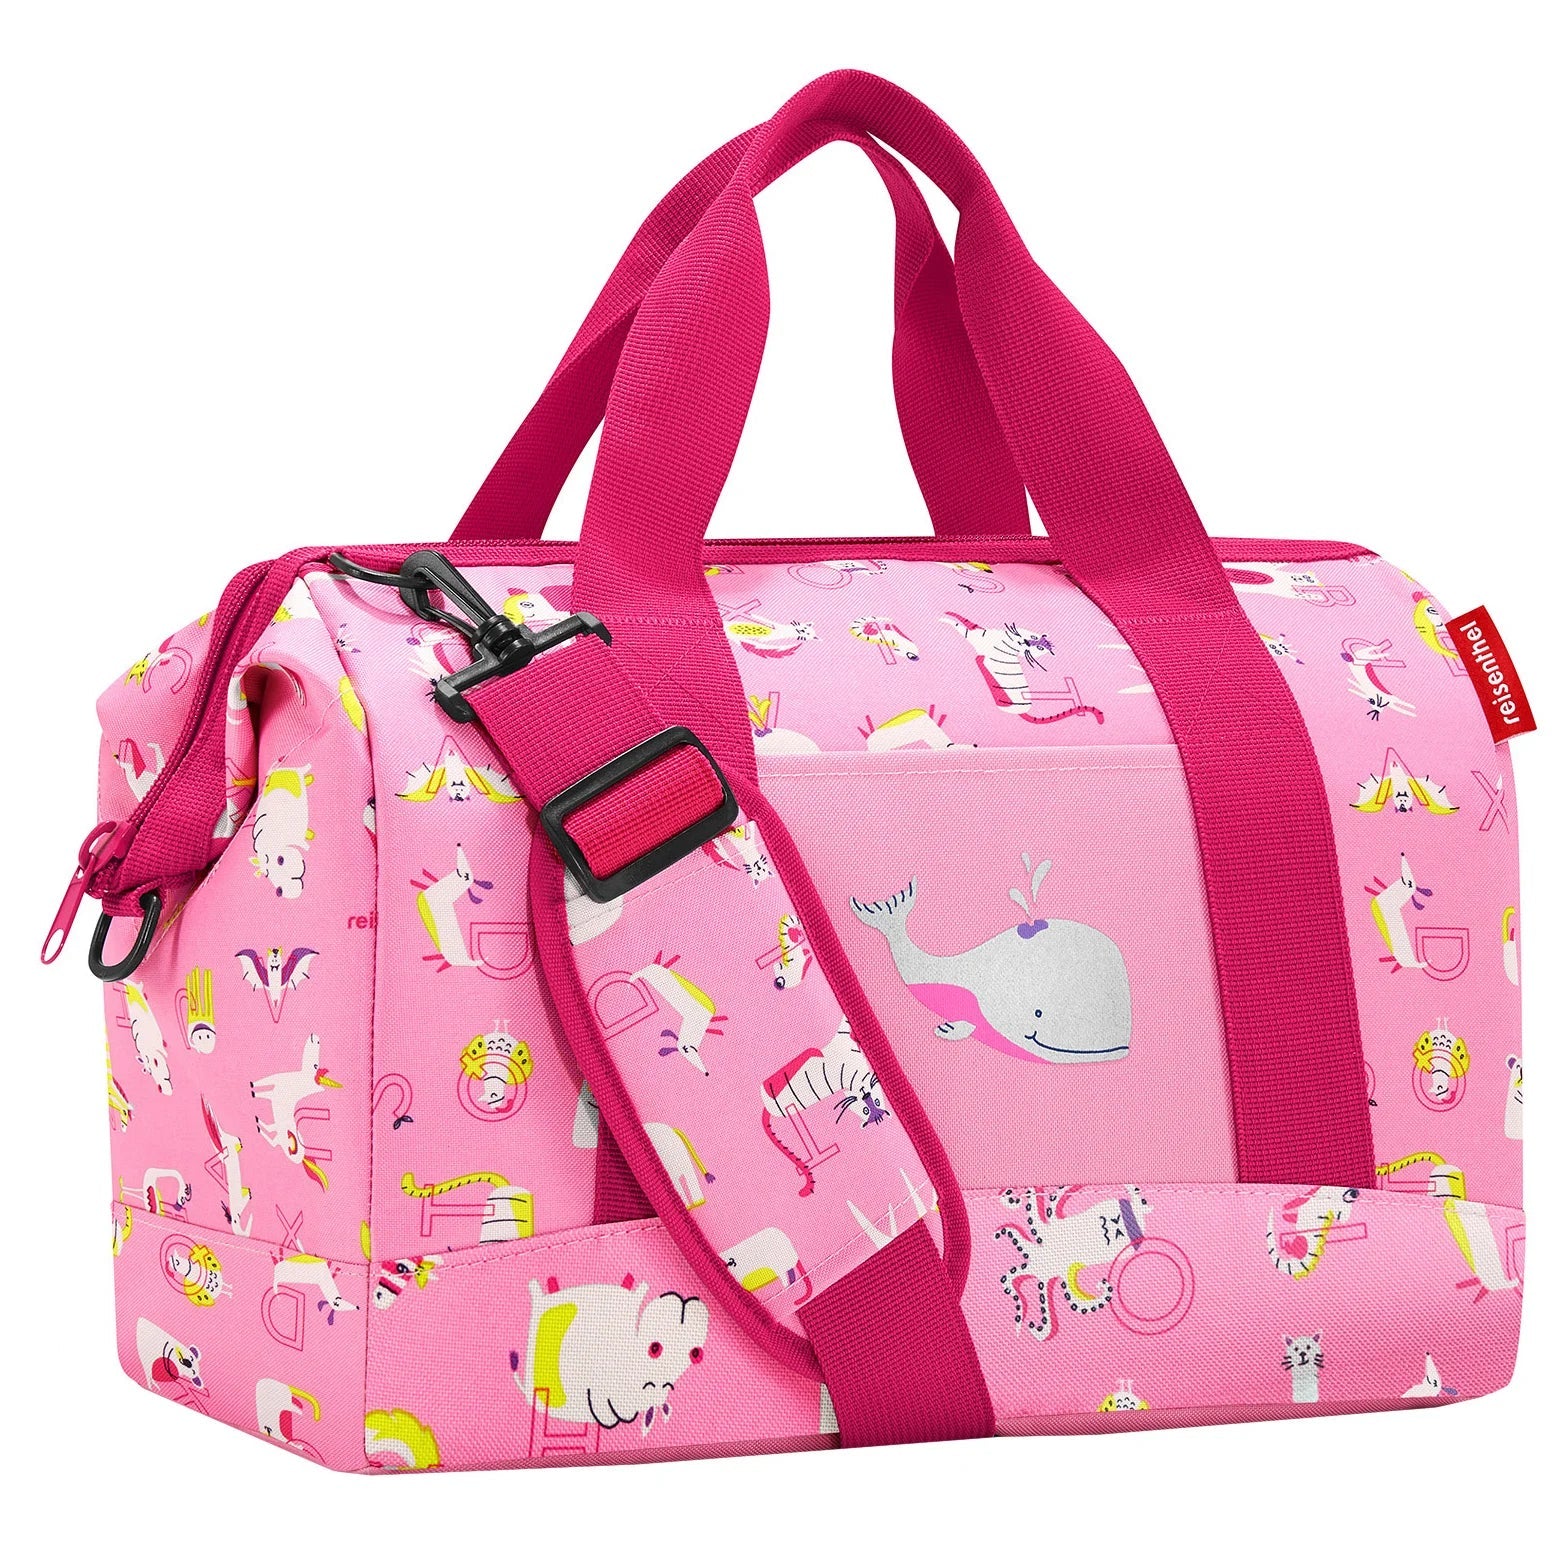 Reisenthel Kids Allrounder M travel bag 40 cm - friends pink